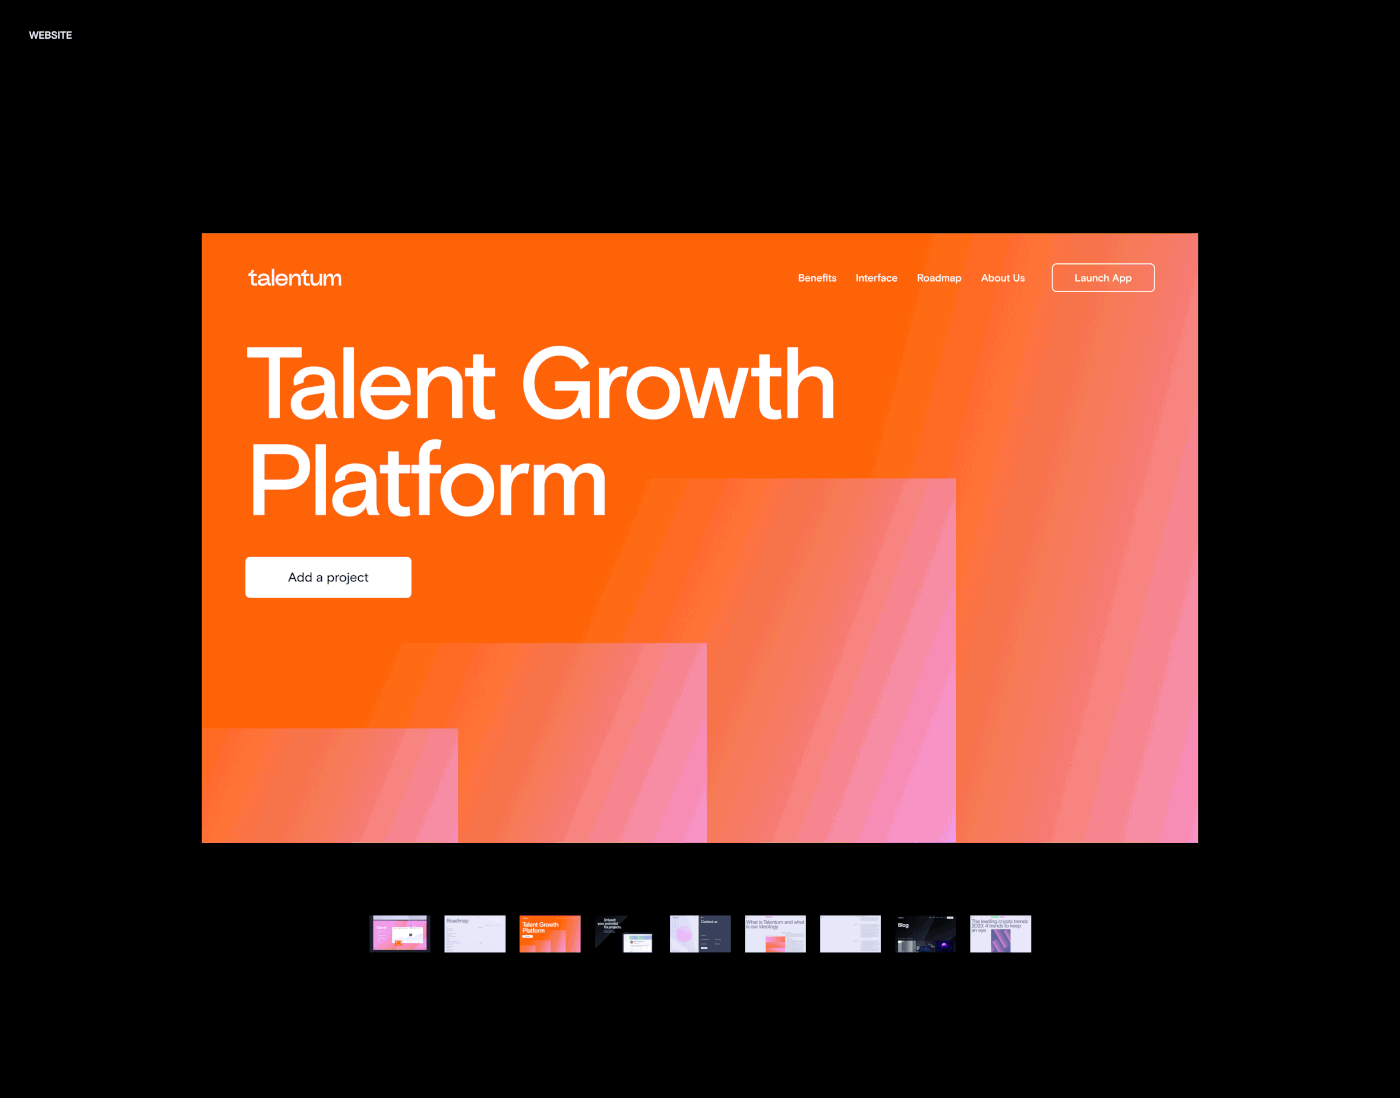 Website for blockchain based talent management platform Talentum.